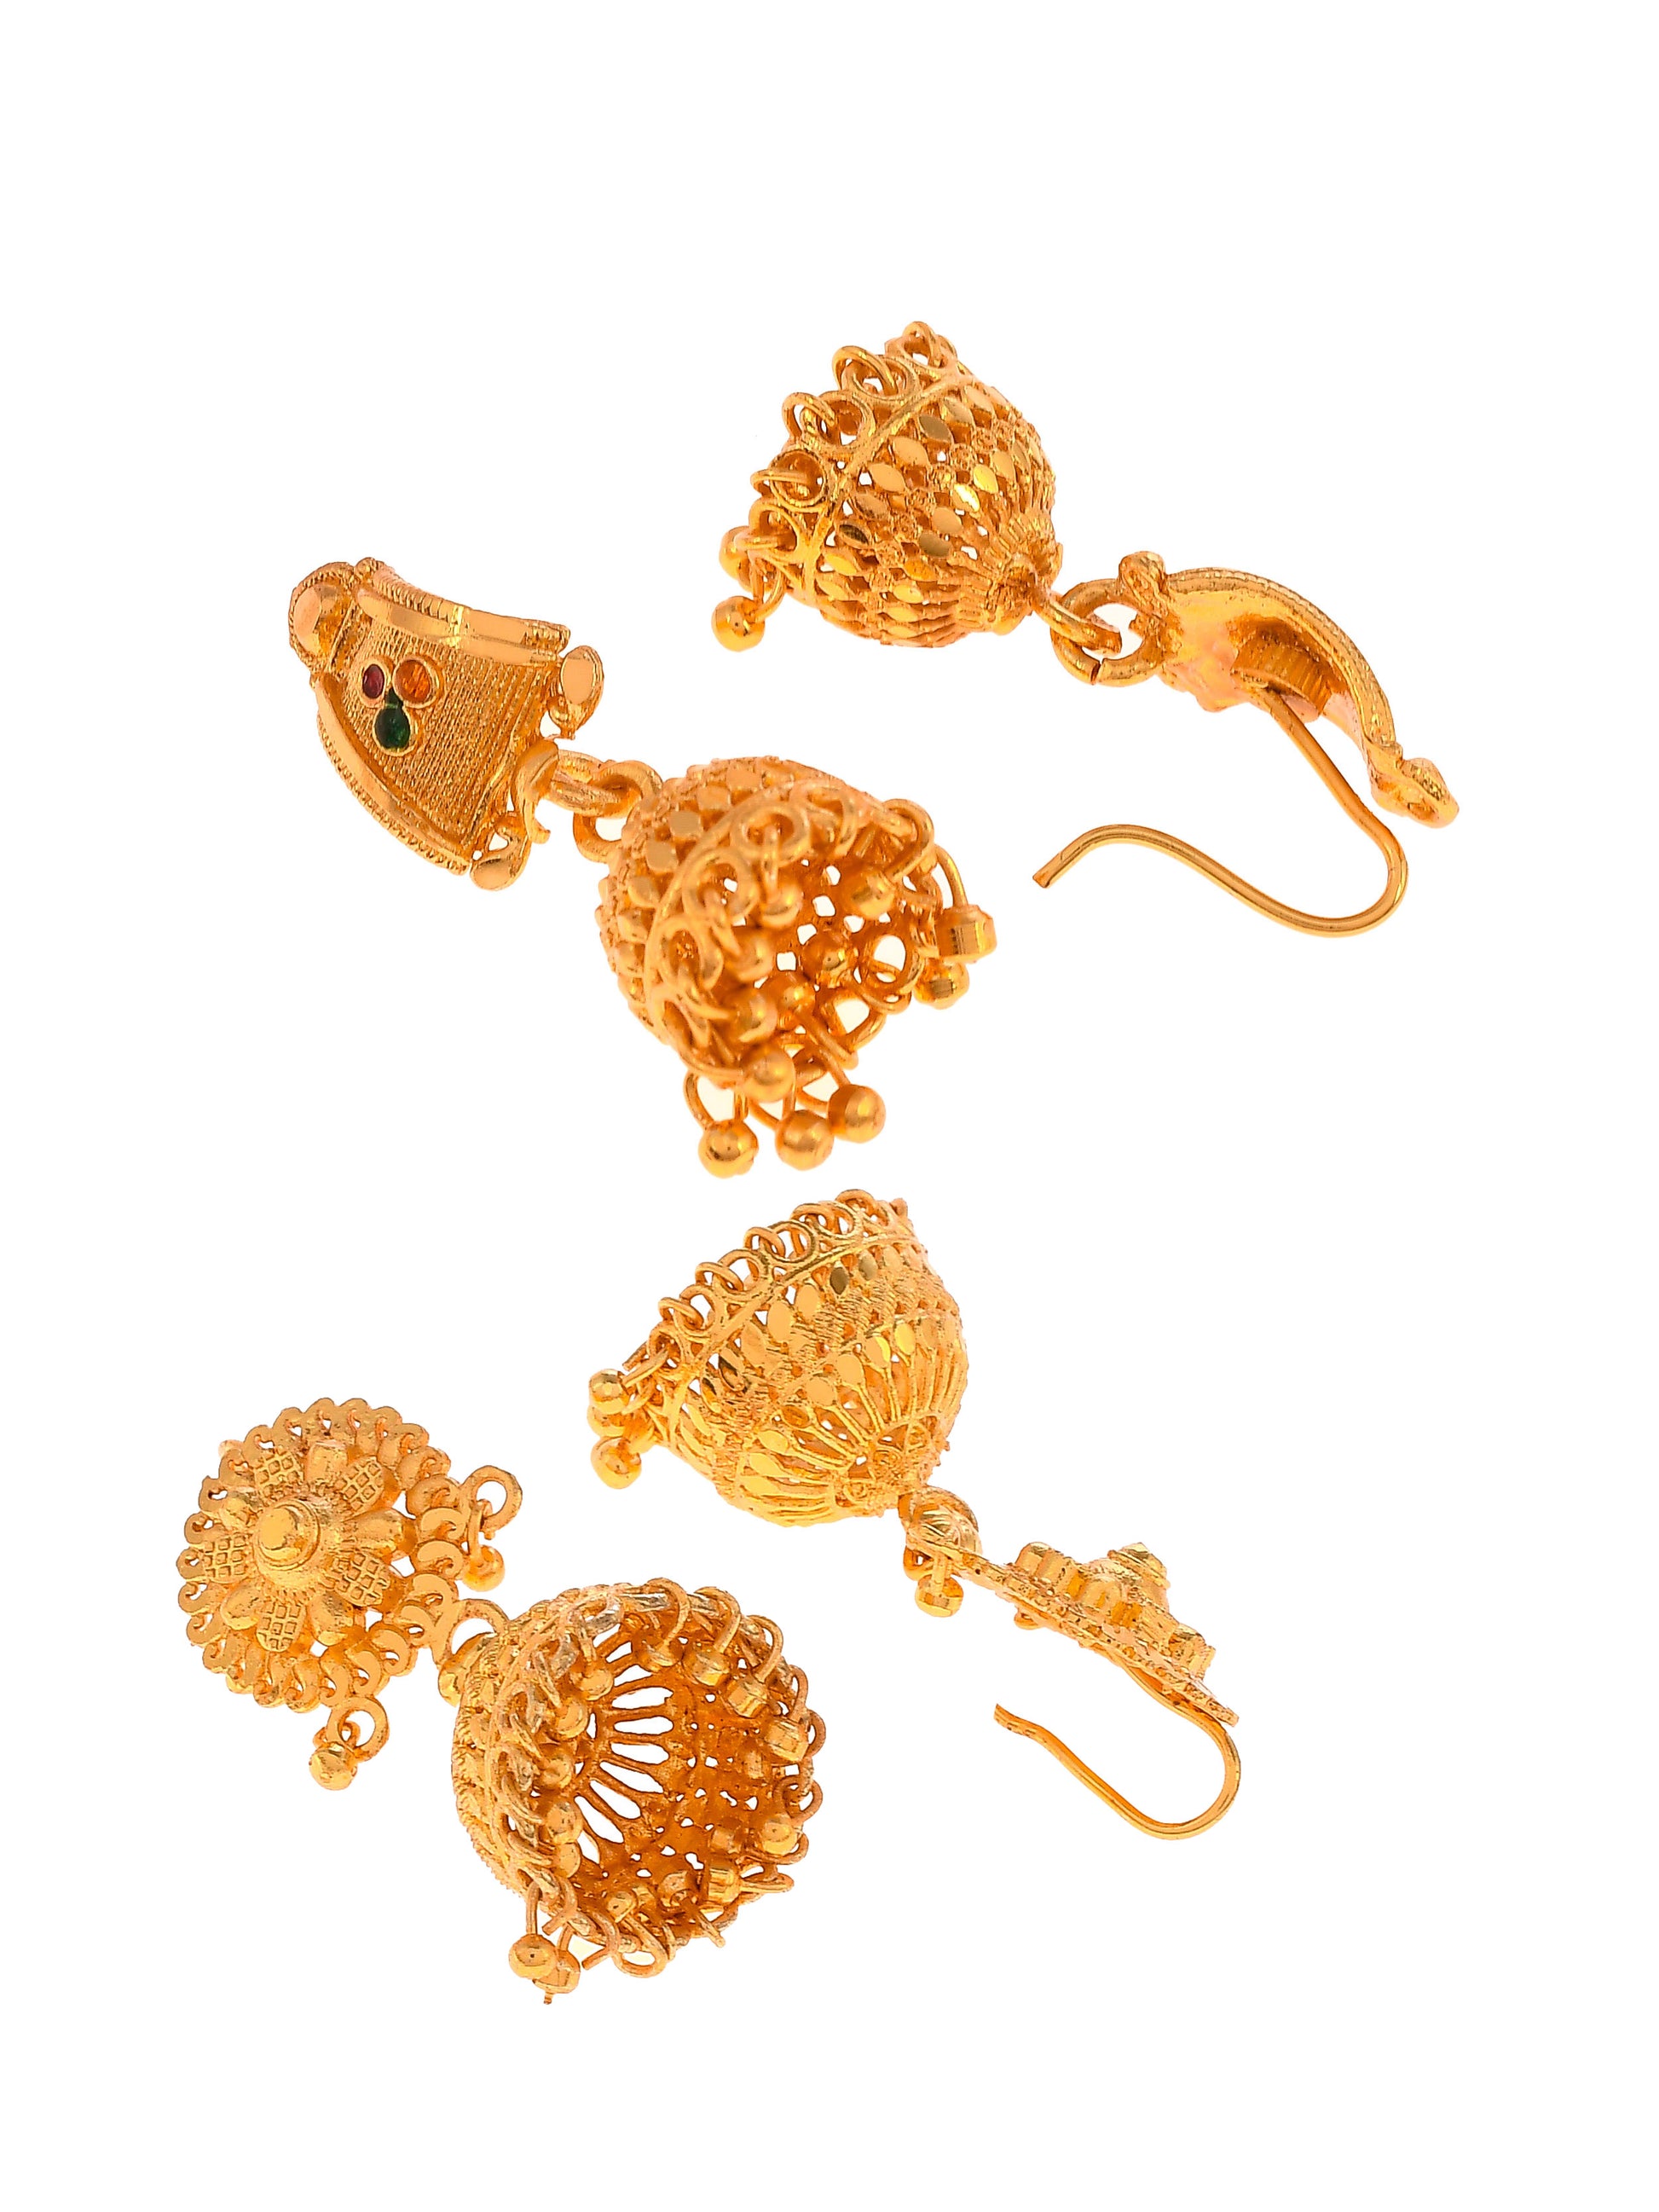 Set of 2 Gold Plated Handcrafted Meenakari Ethnic Temple Jhumka Earrings